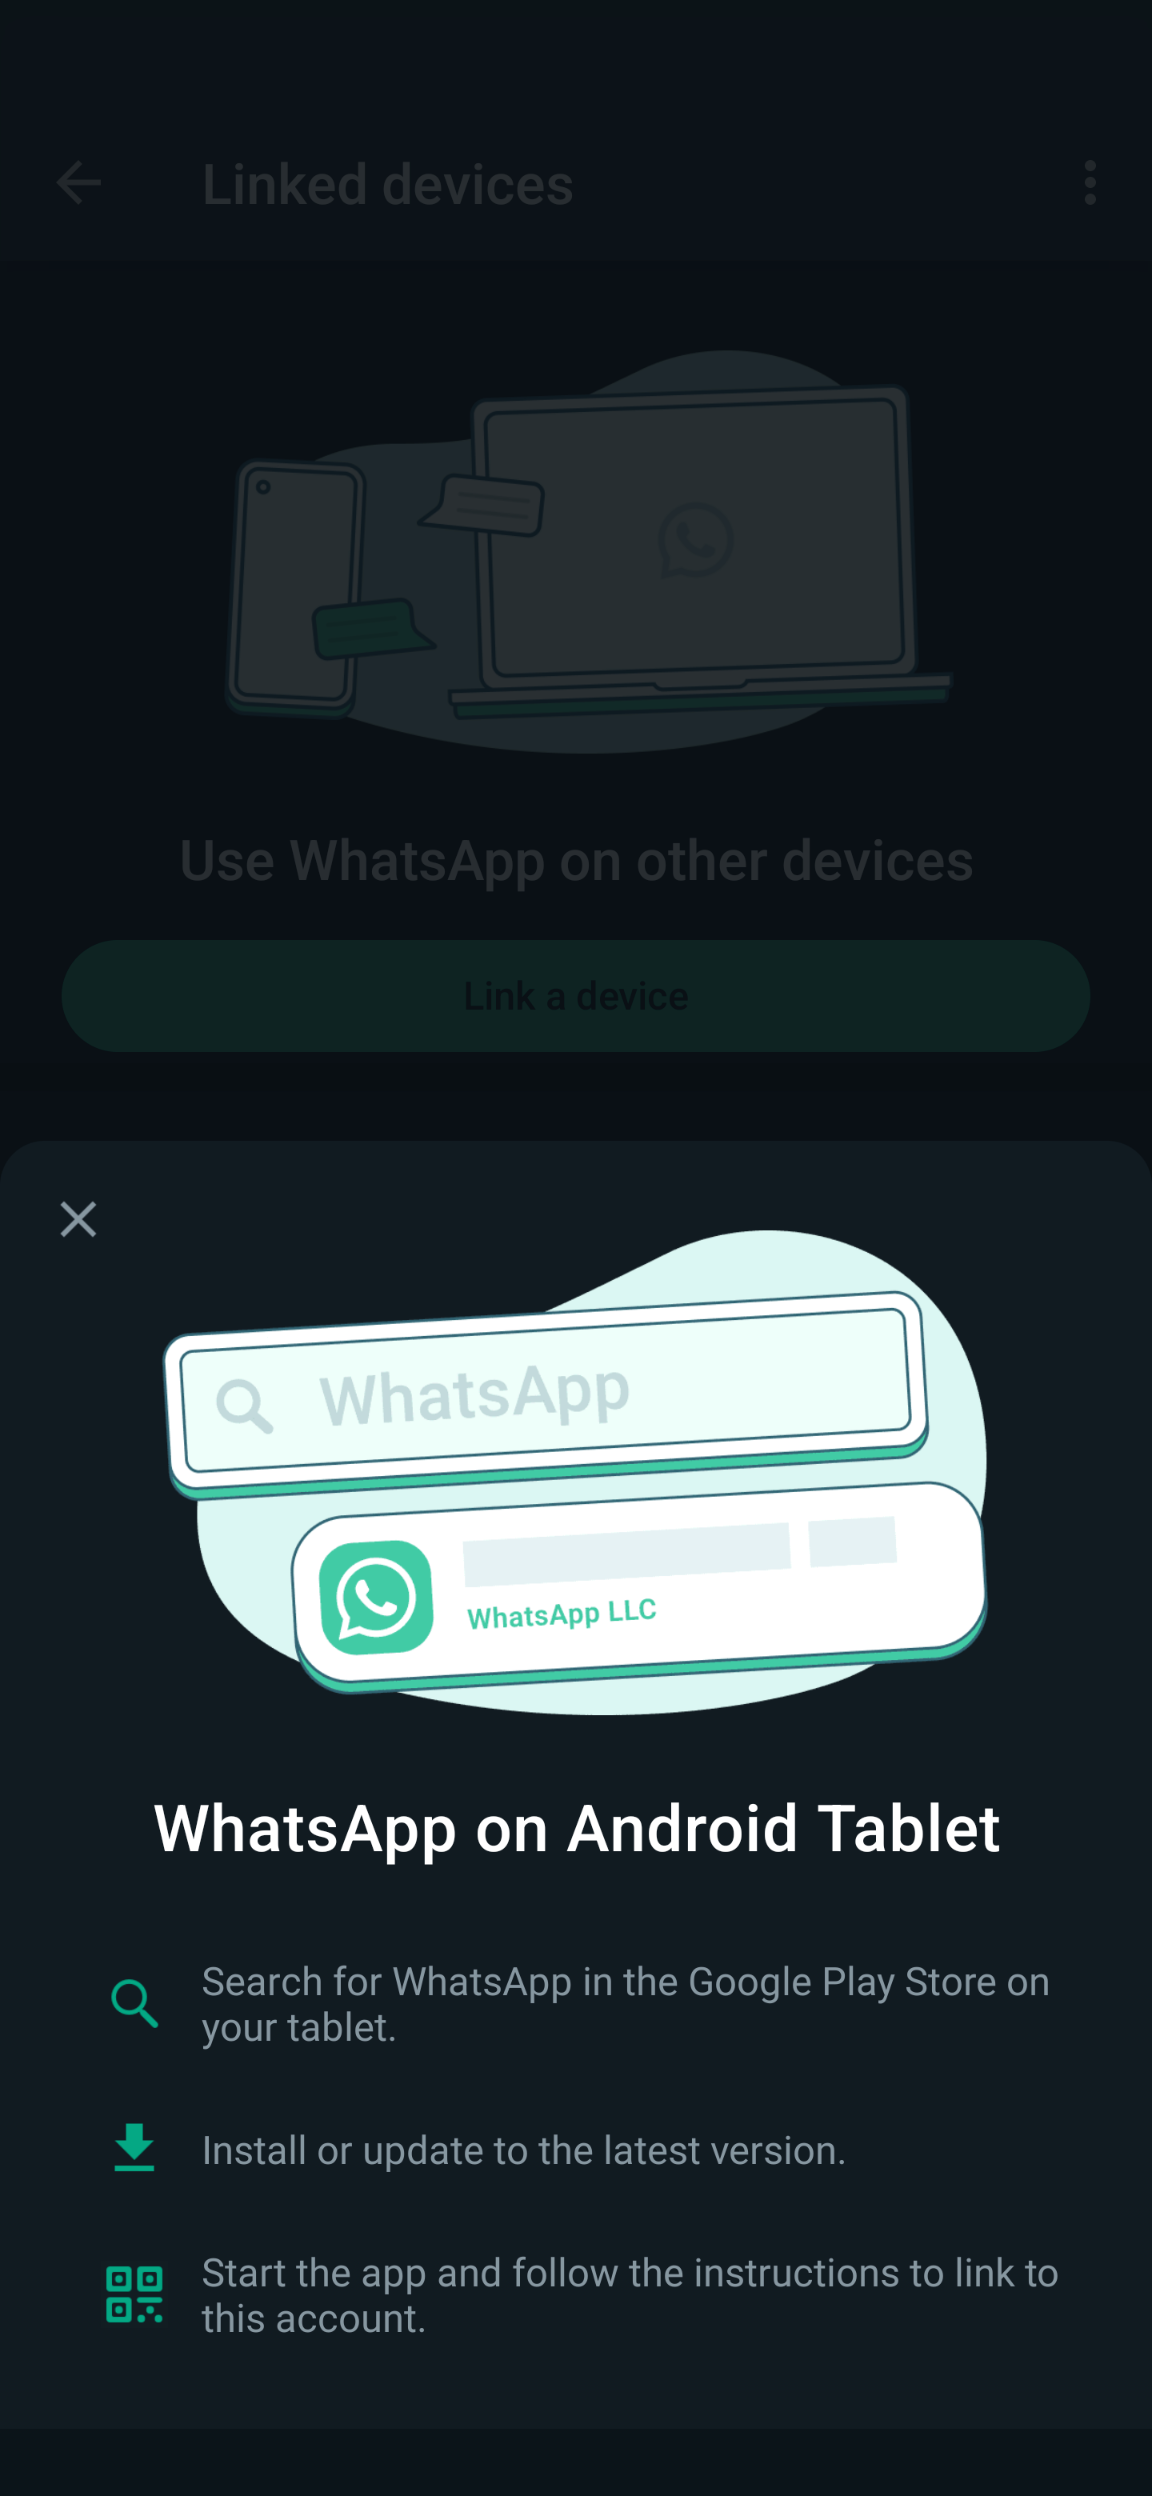 whatsapp-android-tablet-armando-1-1